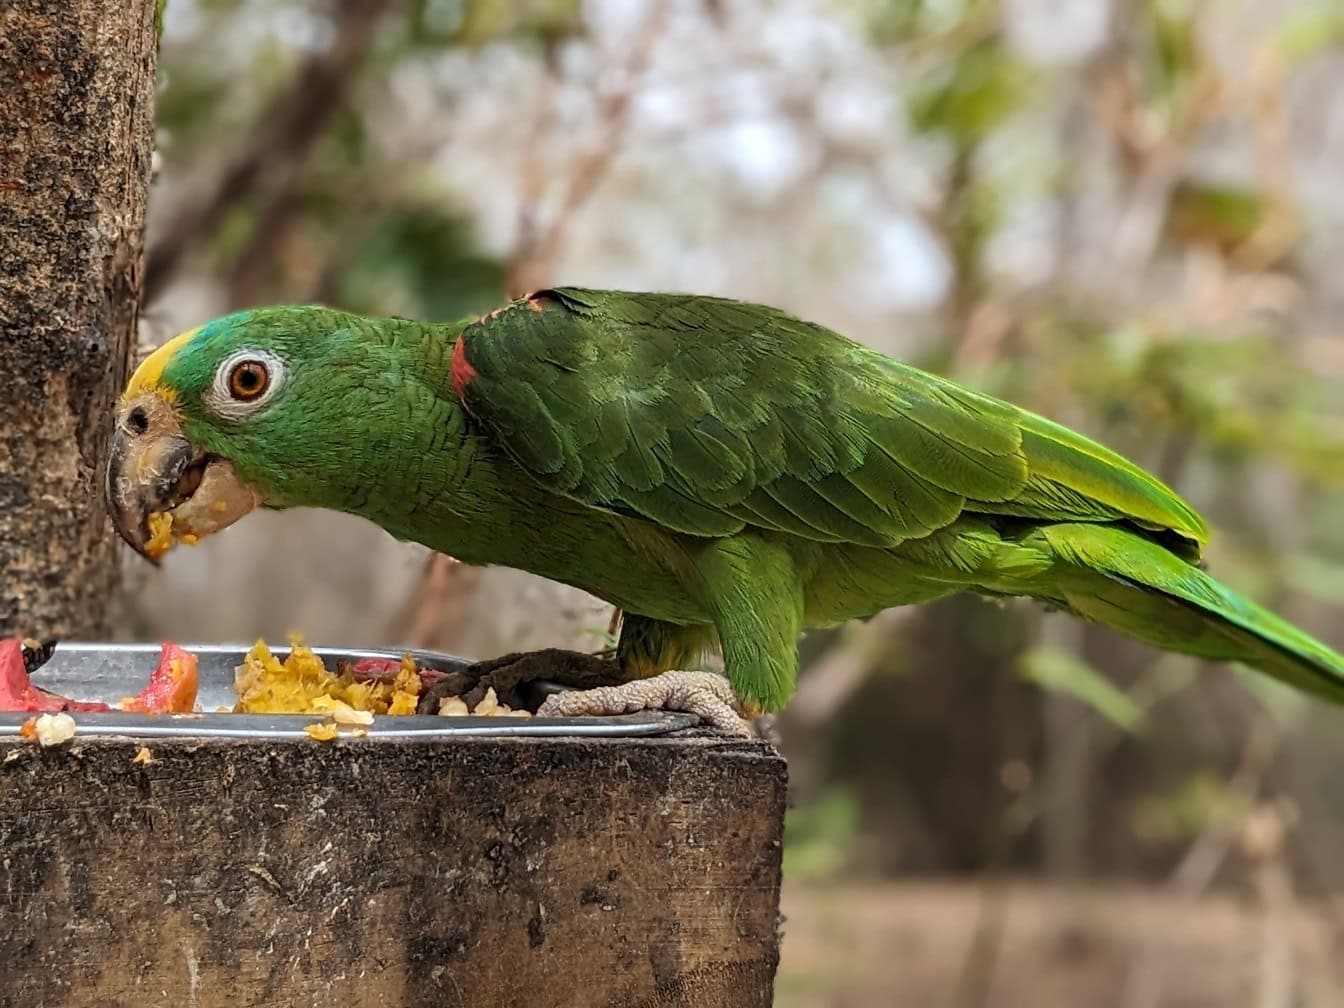 Panamski amazonski papagaj poznat i kao panamska žutoglava amazonska ptica (Amazona ochrocephala panamensis) zeleni papagaj koji jede hranu